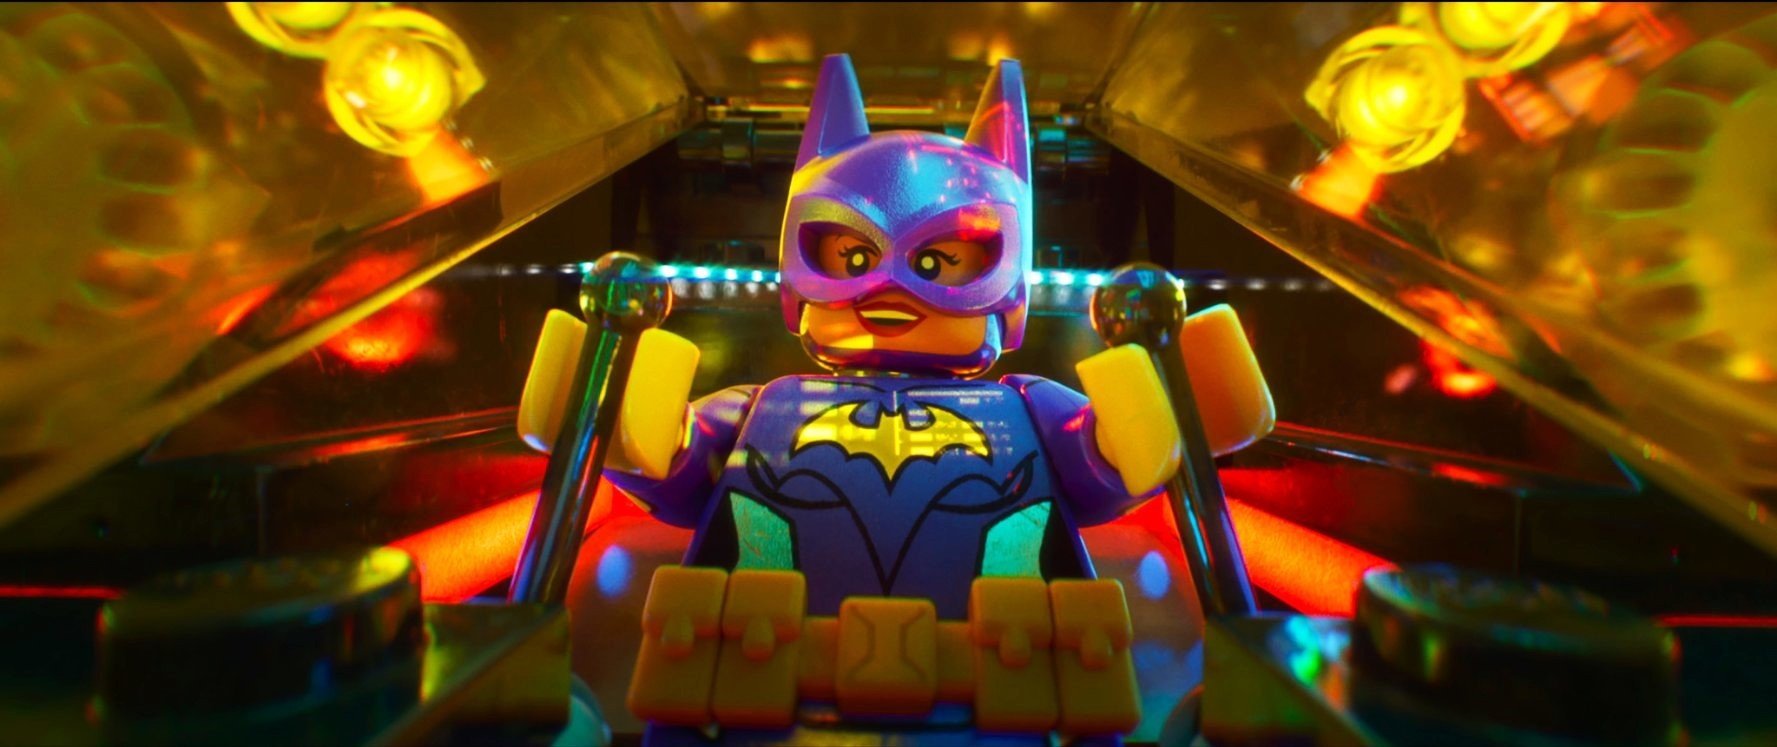 Batgirl/Barbara Gordon from Warner Bros. Pictures' The Lego Batman Movie (2017)